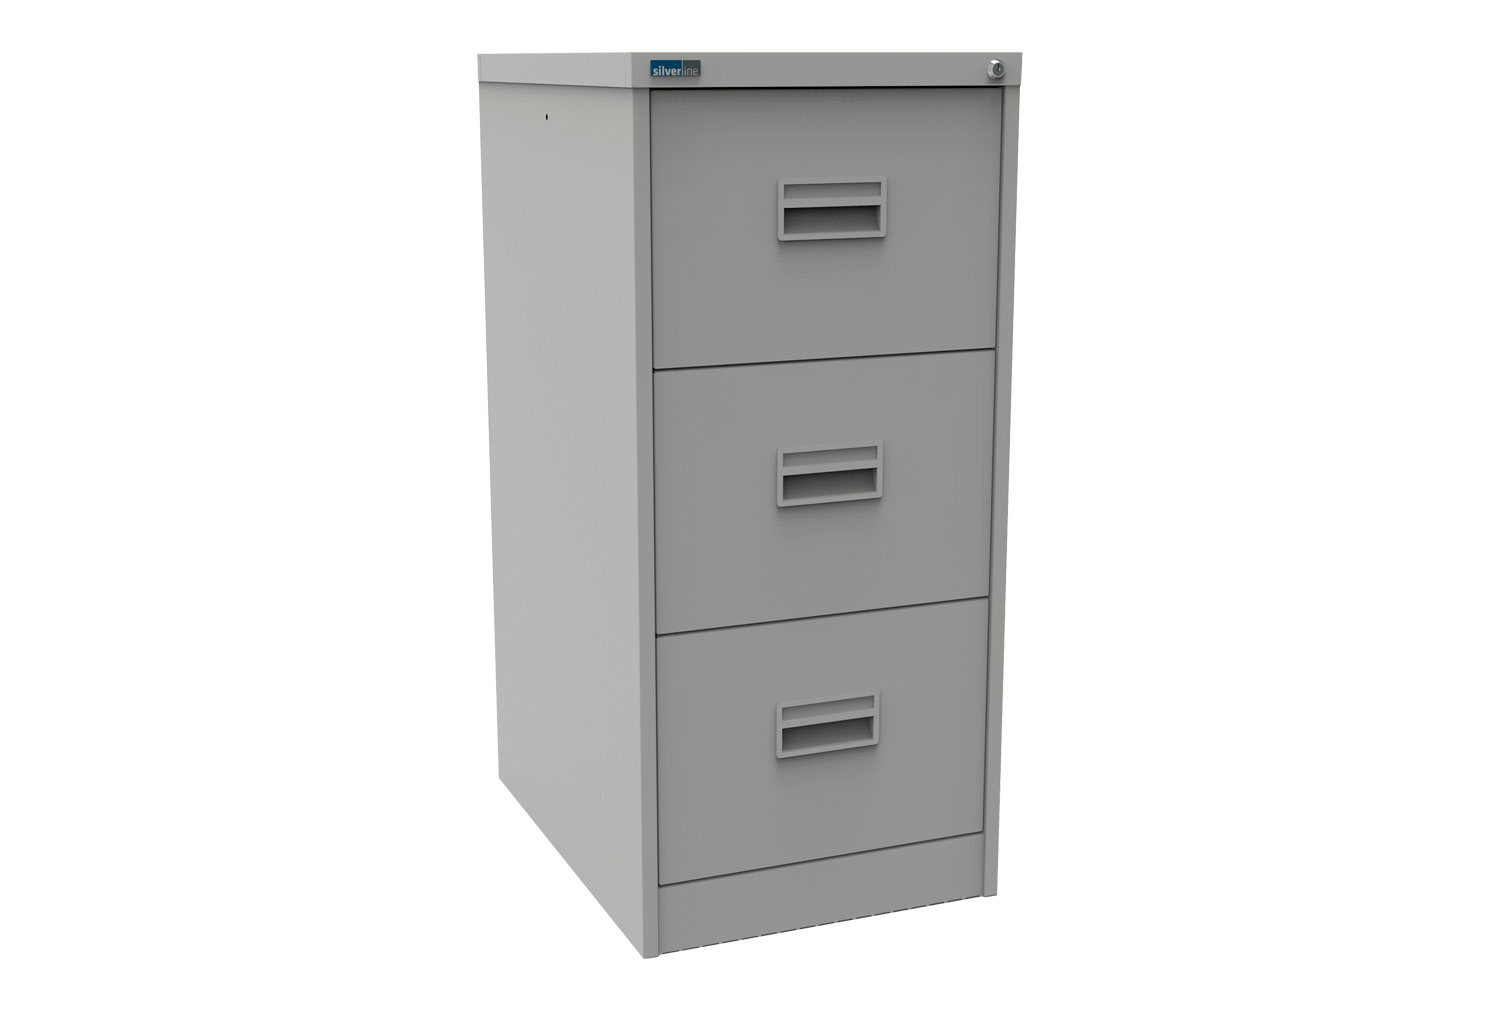 Silverline Midi 3 Drawer Filing Cabinets, 3 Drawer - 46wx62dx101h (cm), Light Grey